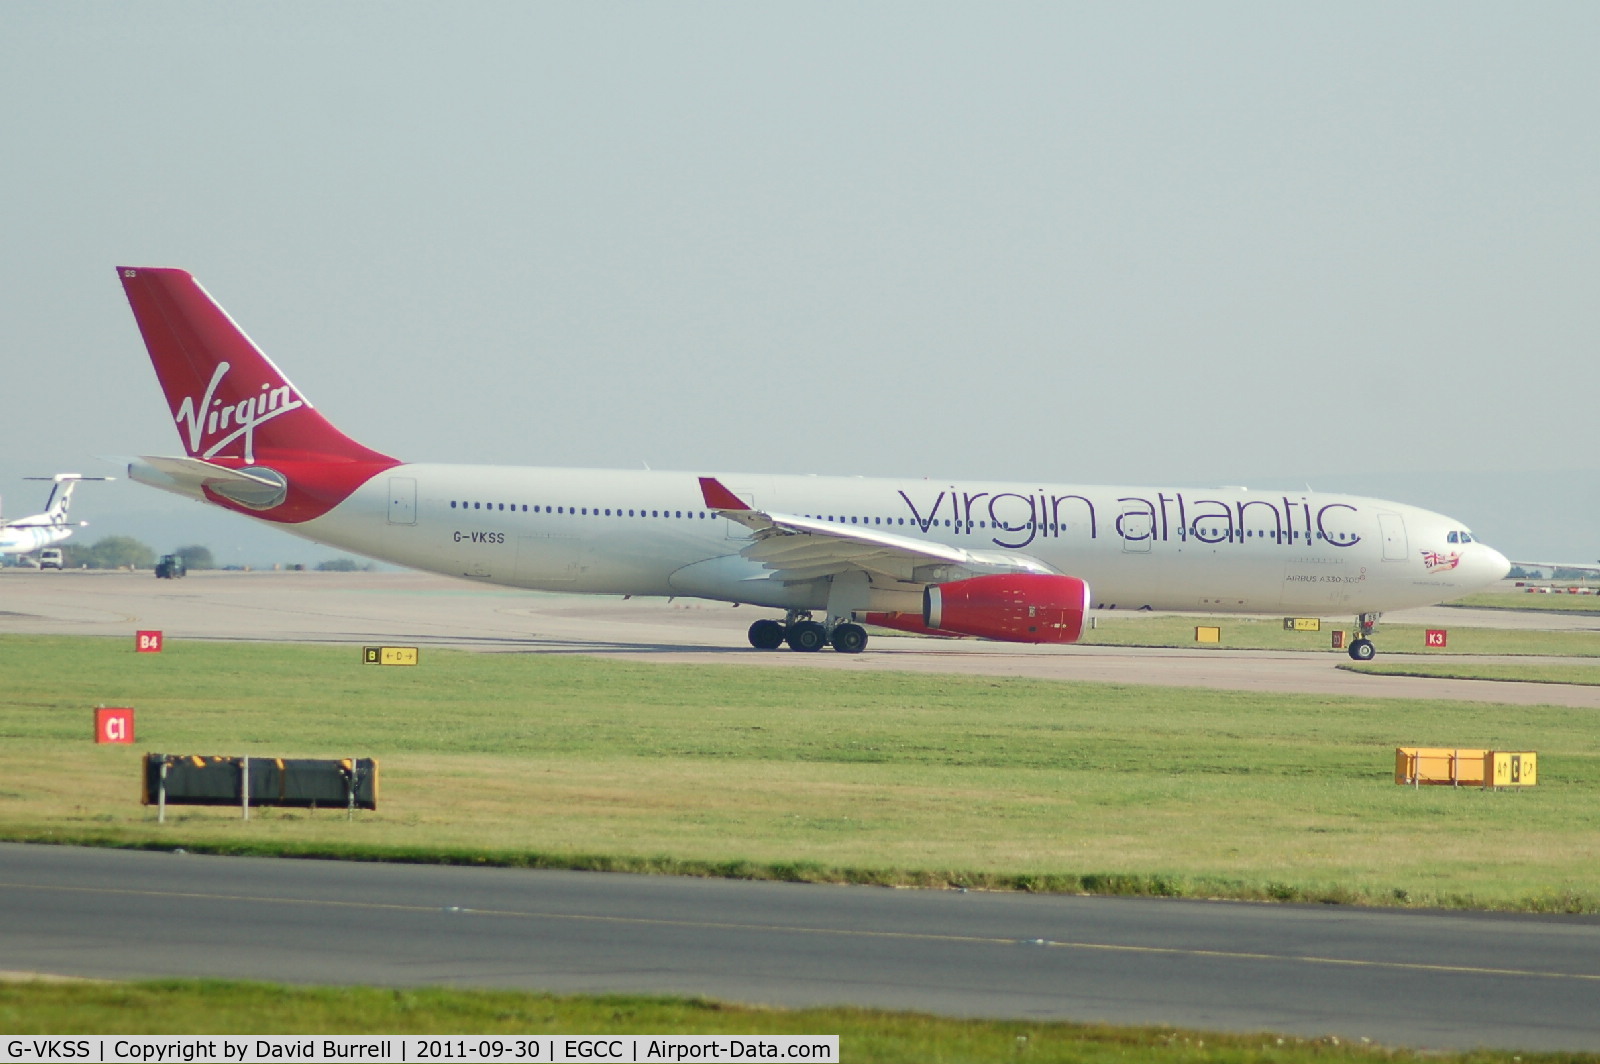 G-VKSS, 2010 Airbus A330-343X C/N 1201, Virgin Atlantinc Airbus A330 taxiing at Manchester Airport.